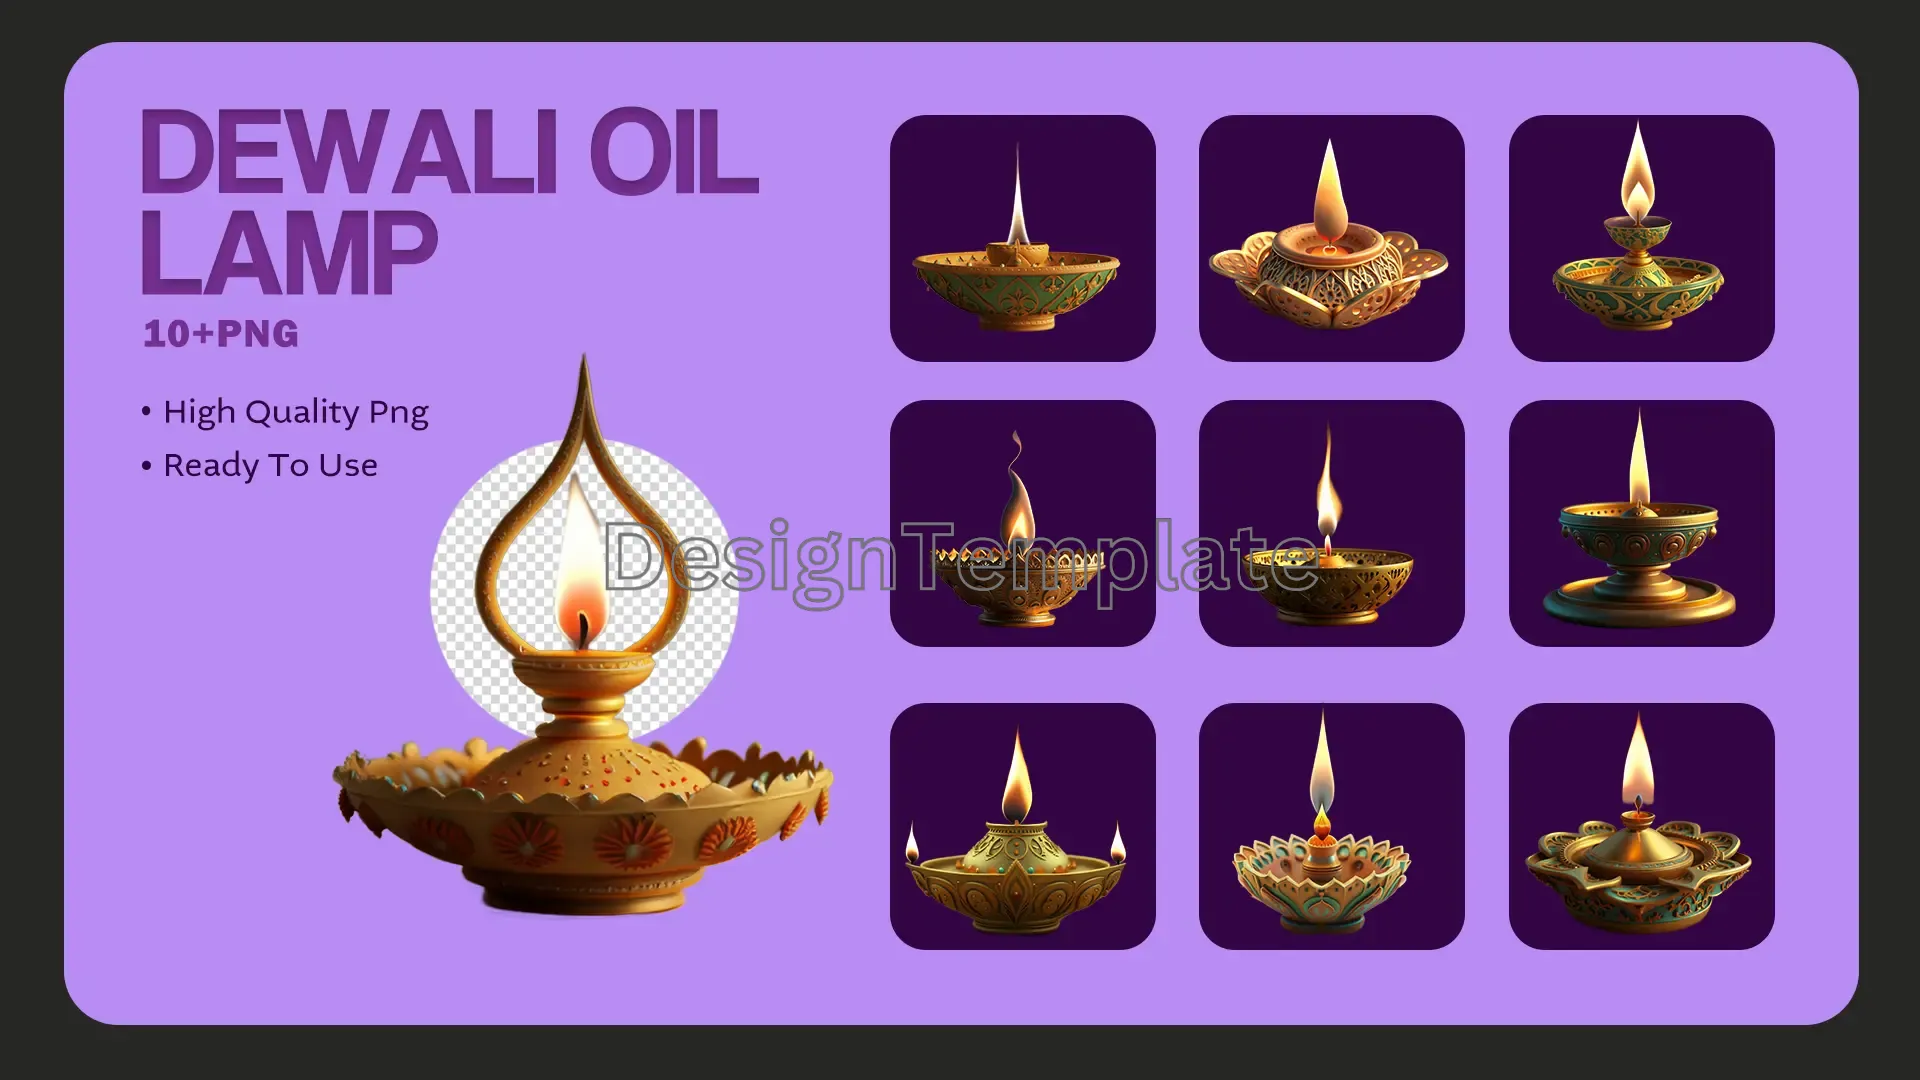 Festival of Lights Diwali Oil Lamp 3D Collection image